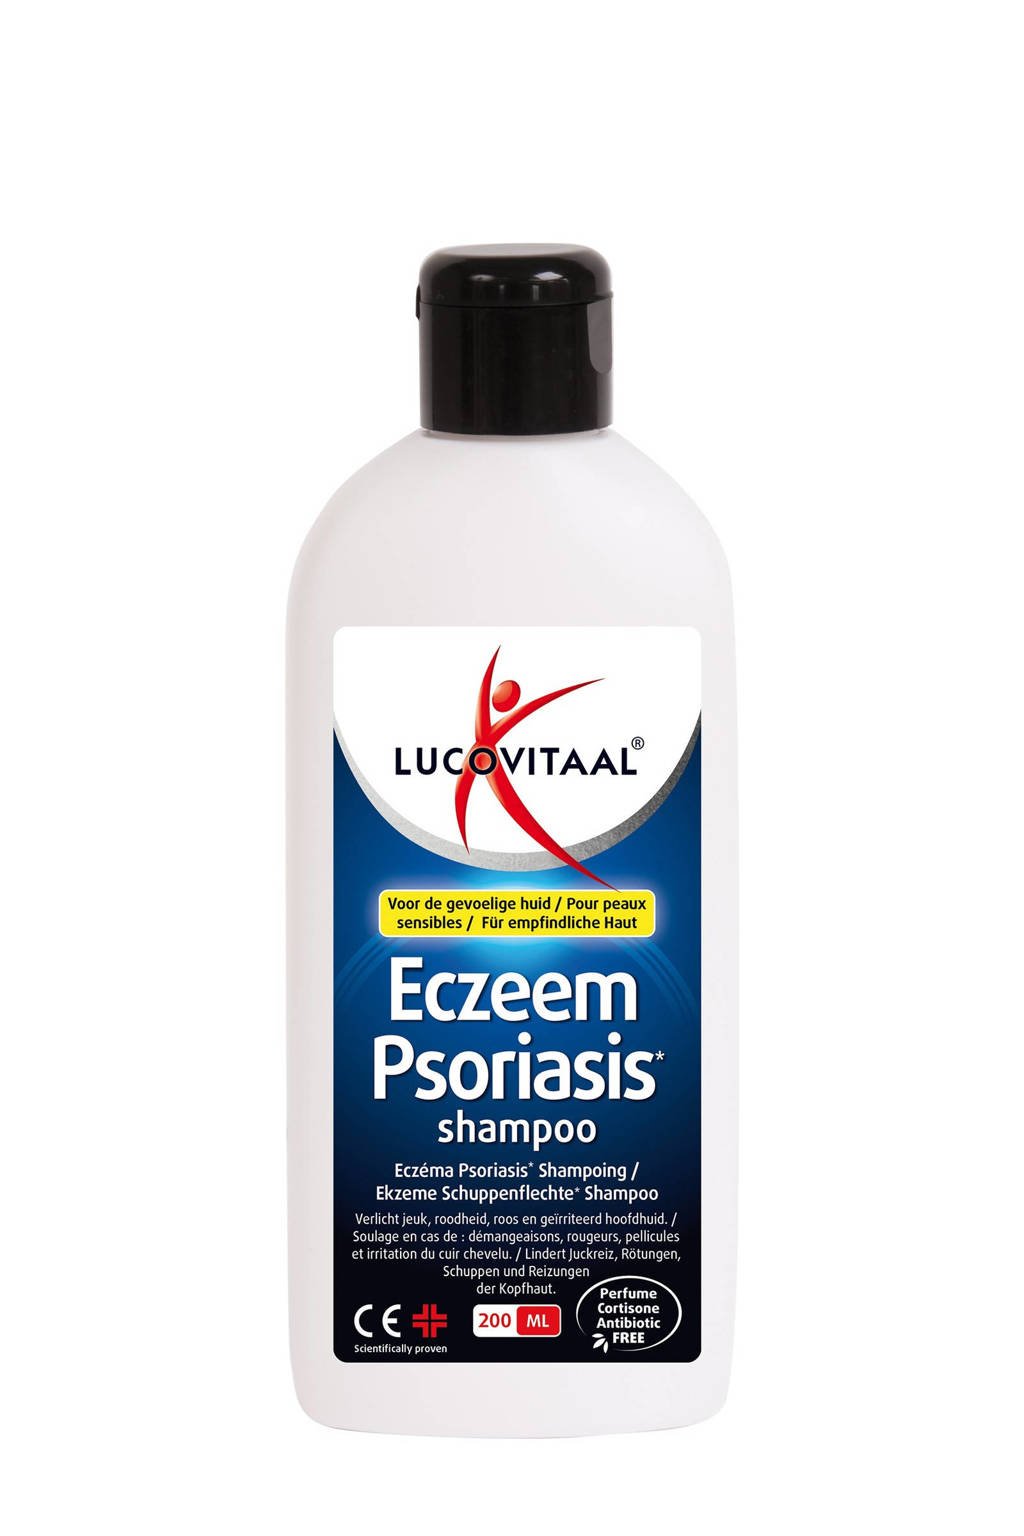 Lucovitaal Eczeem Psoriasis shampoo - 200 ml